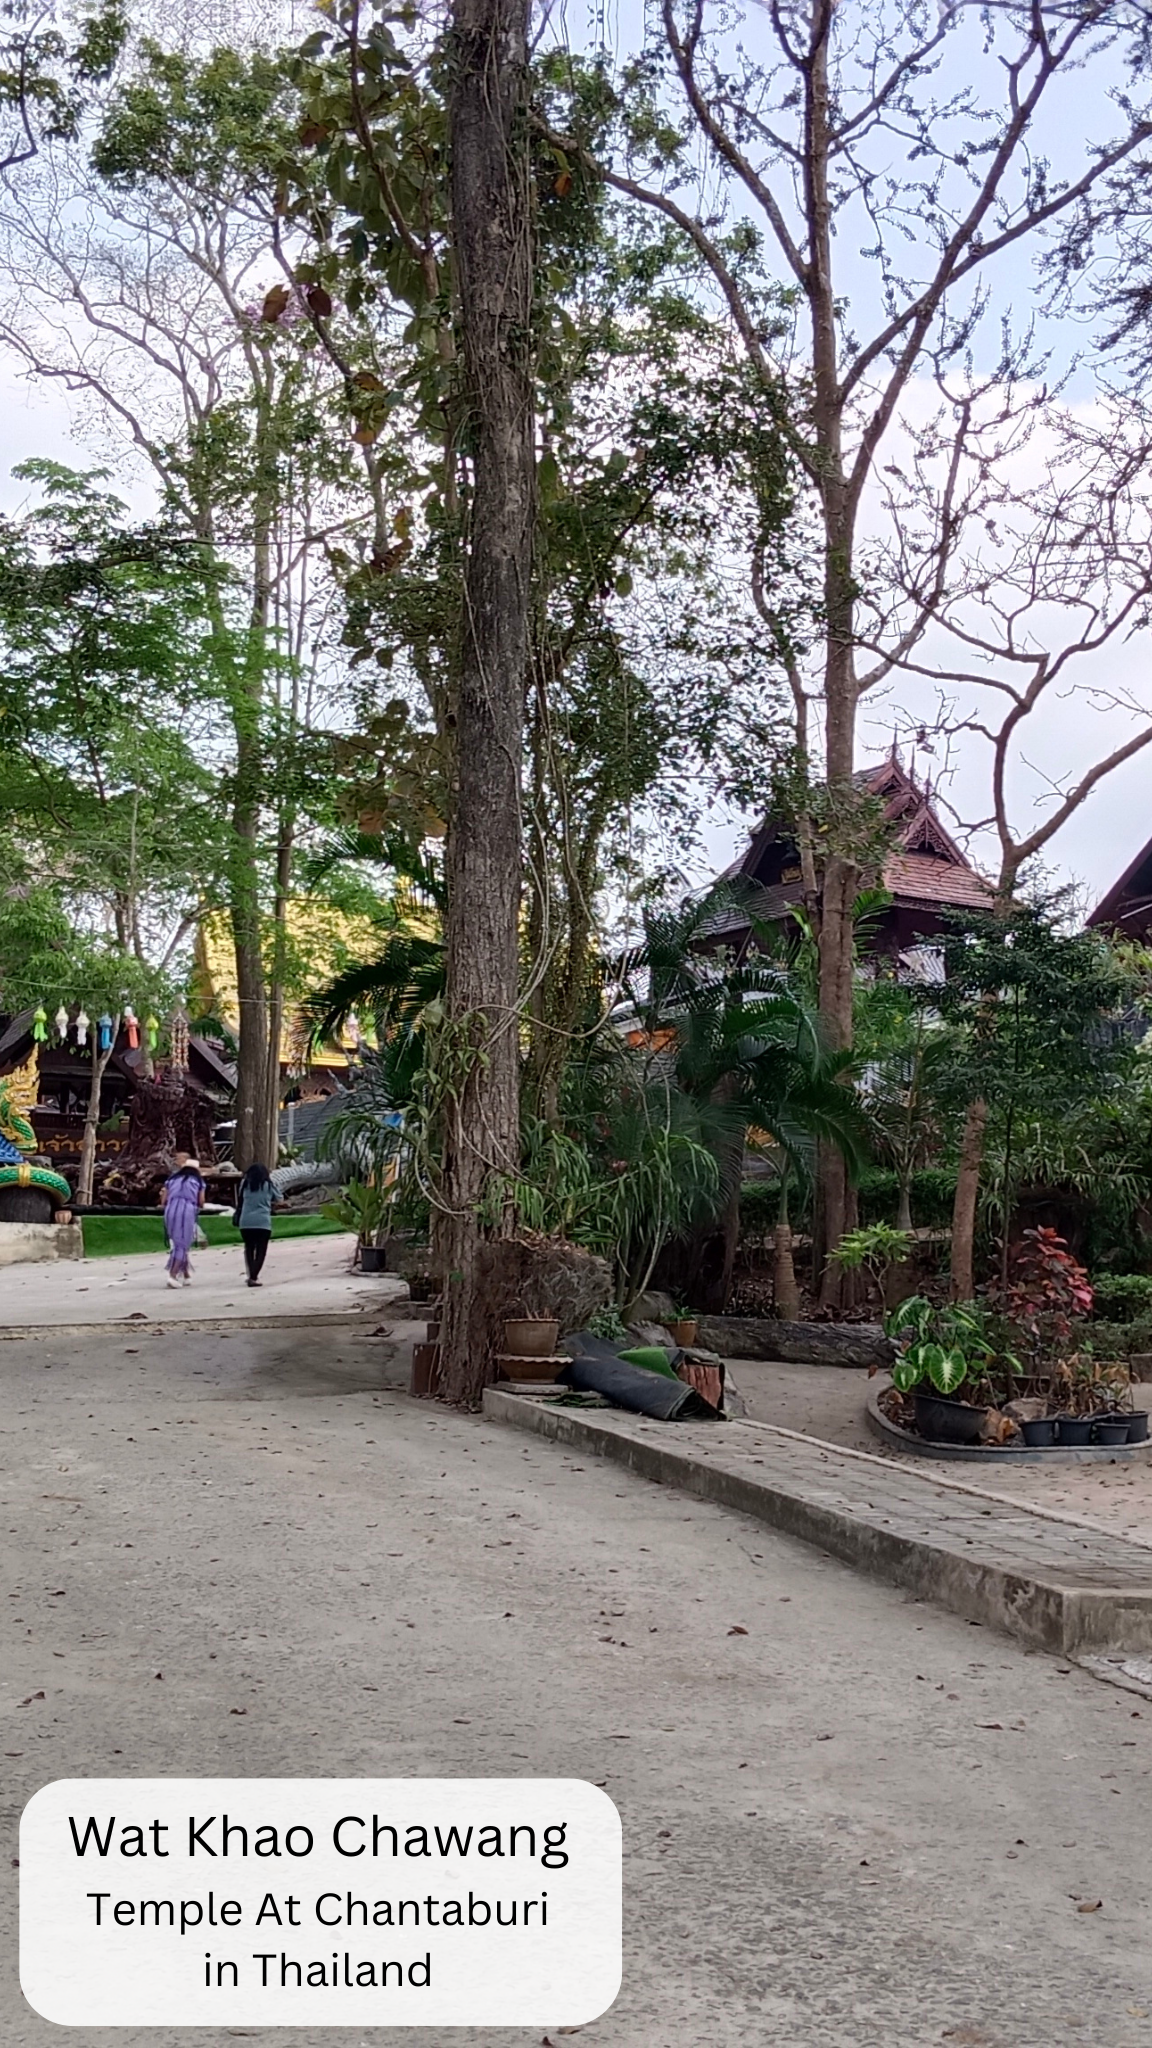 thailand temple, area around wat khao chawang in chantaburi